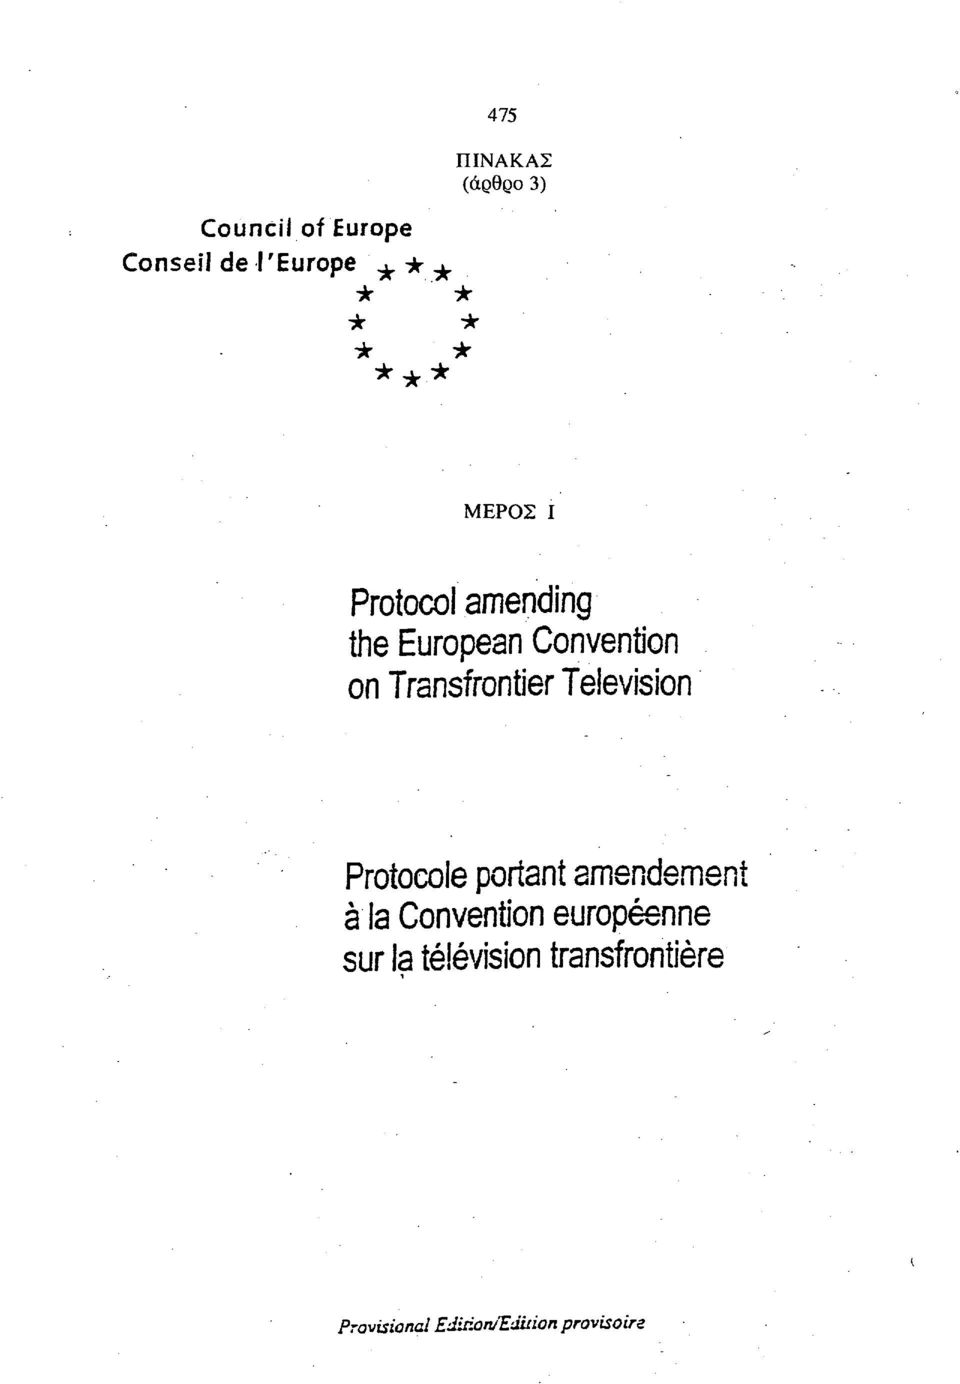 Television Protocole portant amendement a la Convention europeenne